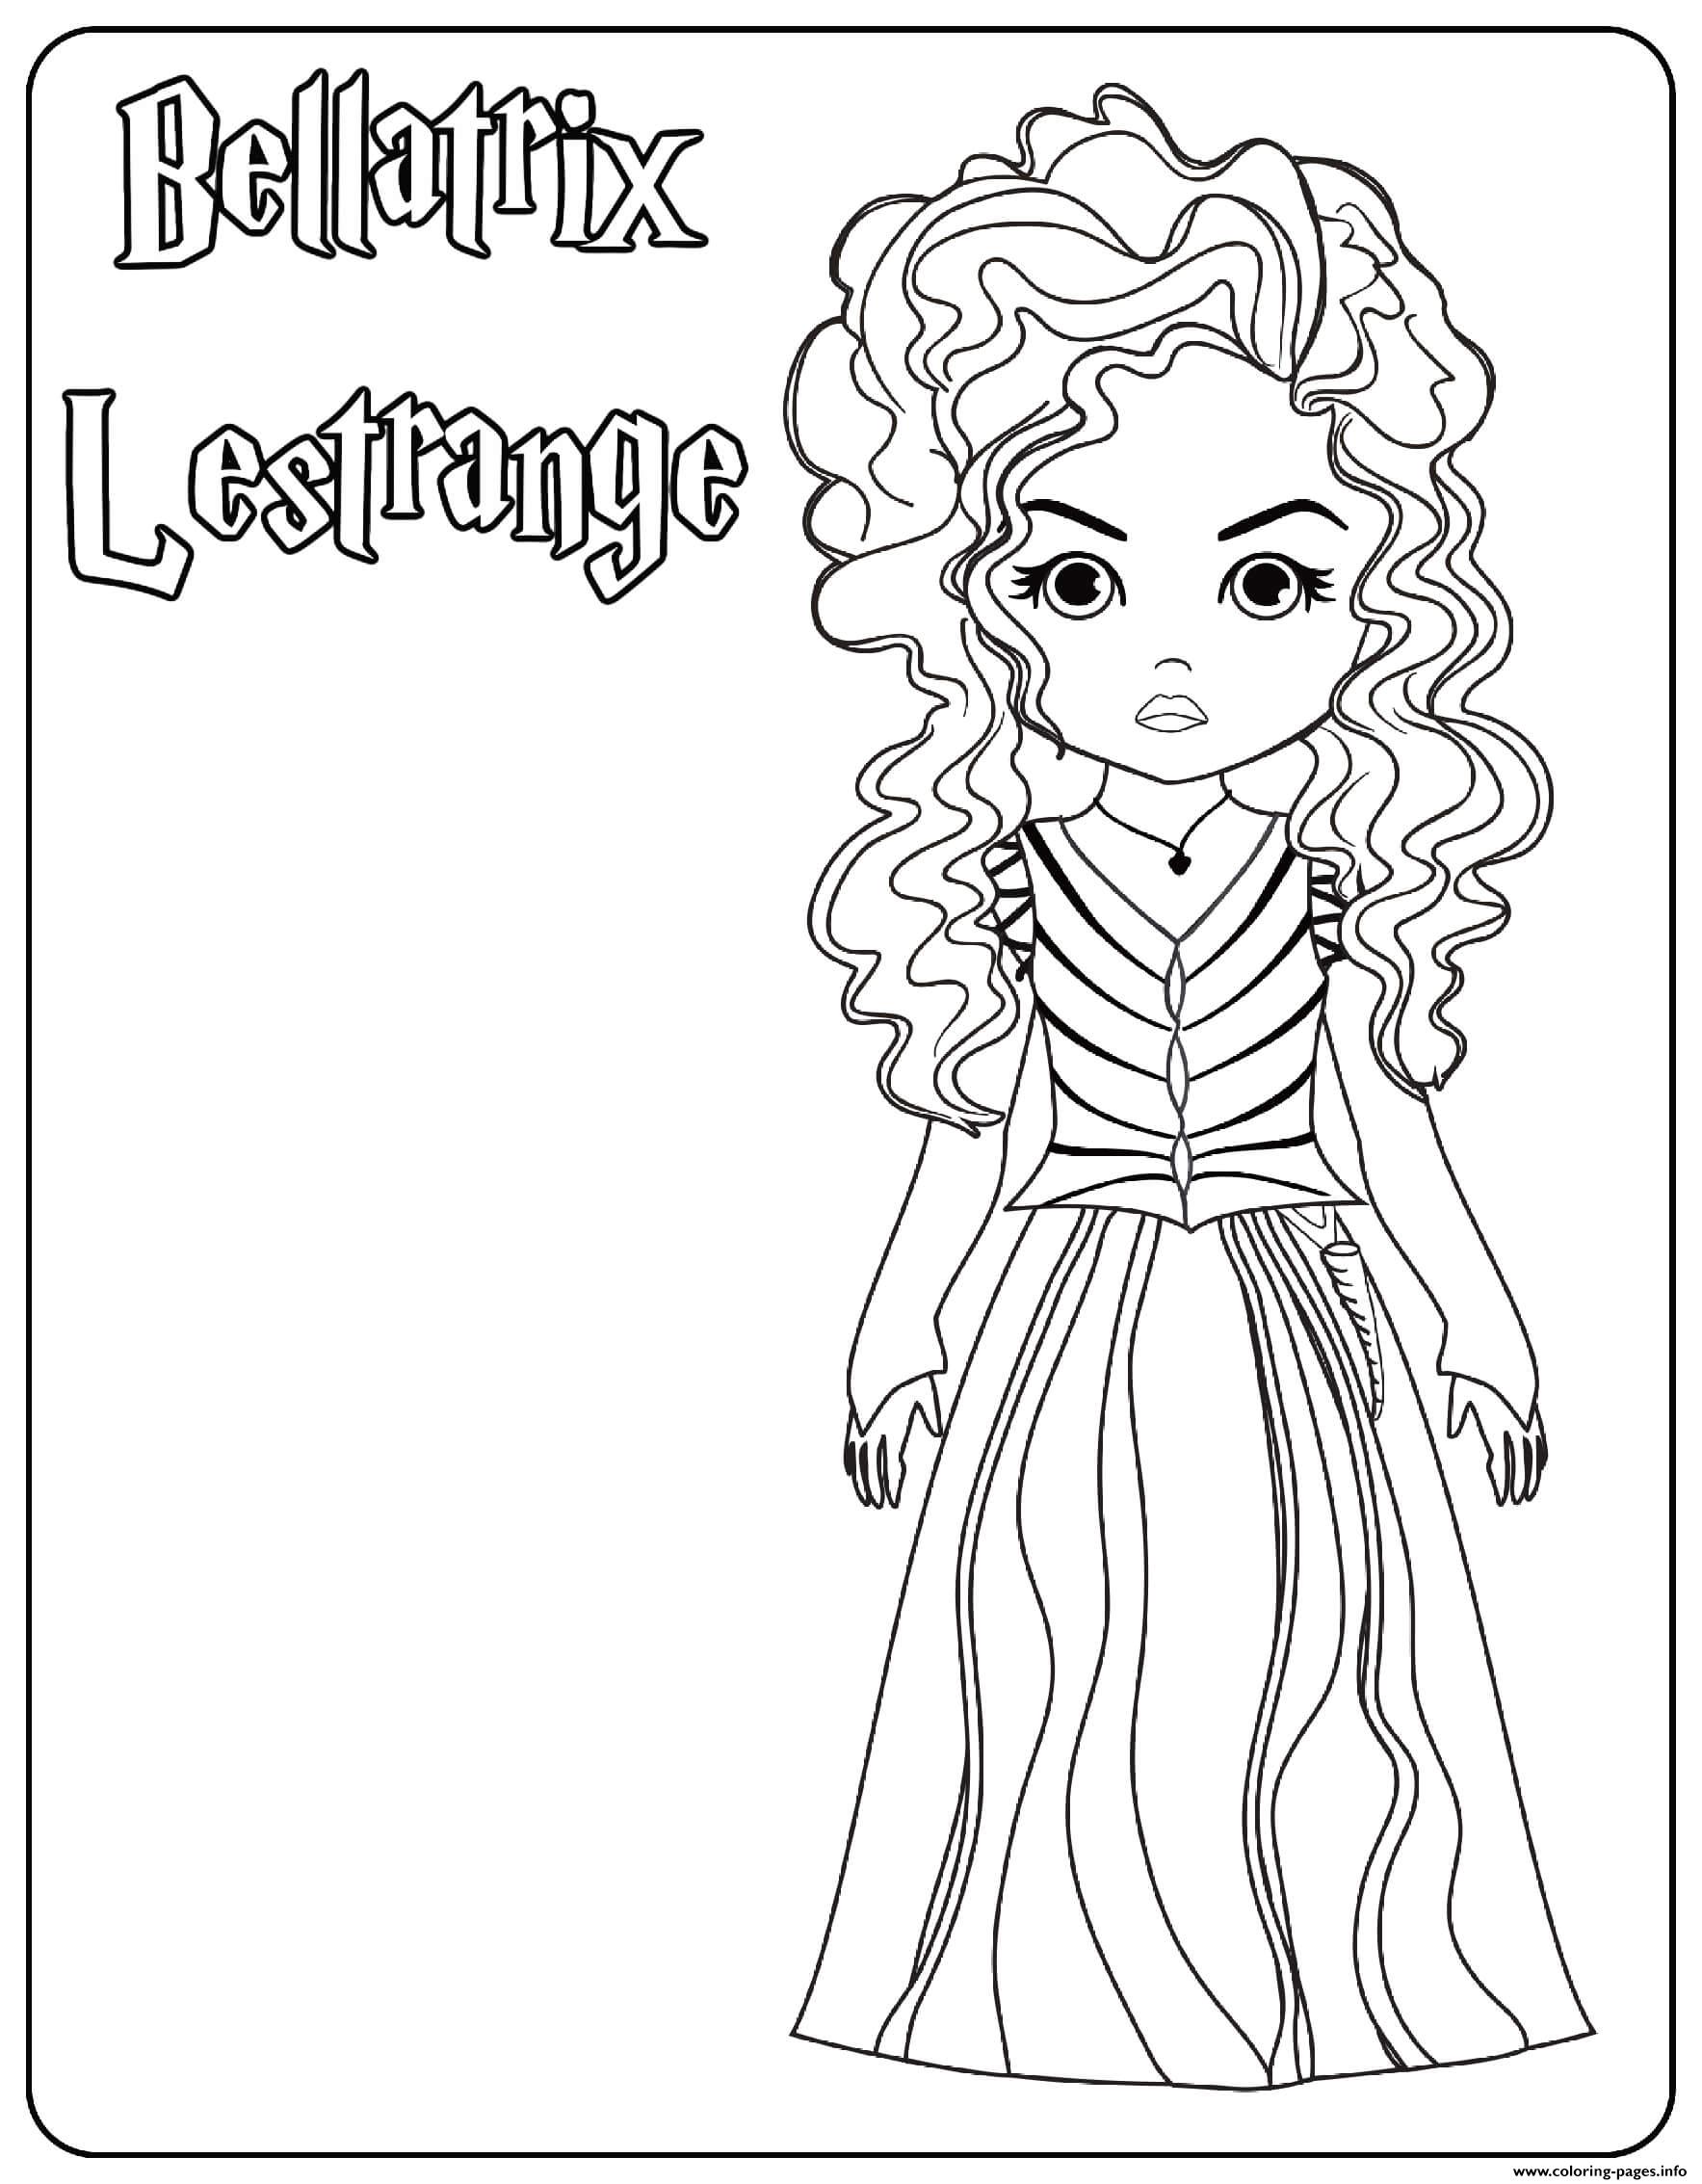 Bellatrix Lestrange coloring